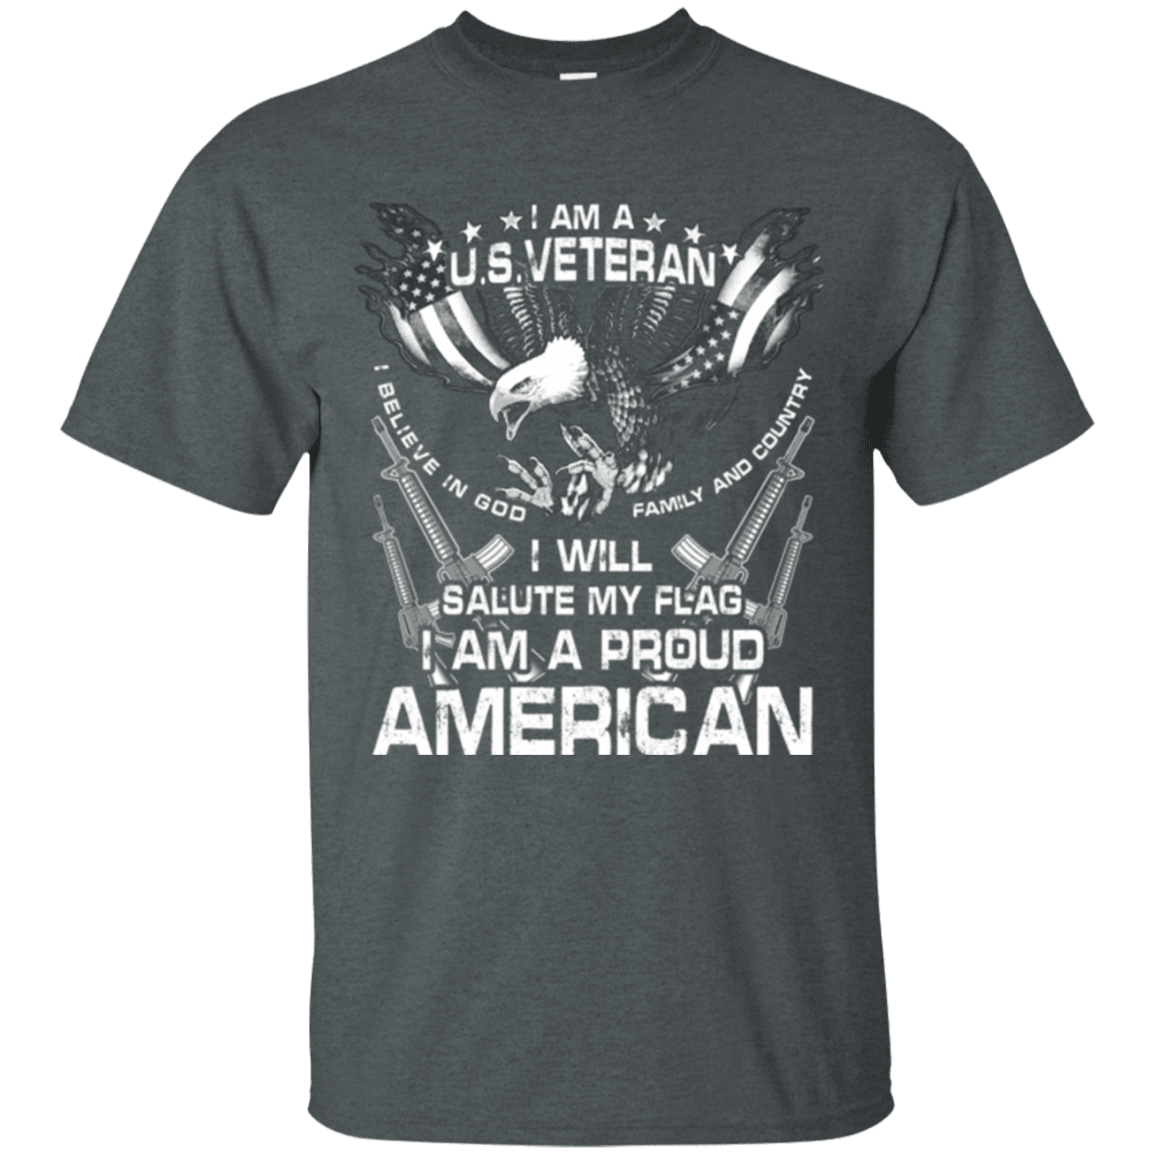 Military T-Shirt "I WILL SALUTE MY FLAG PROUD AMERICAN"-TShirt-General-Veterans Nation